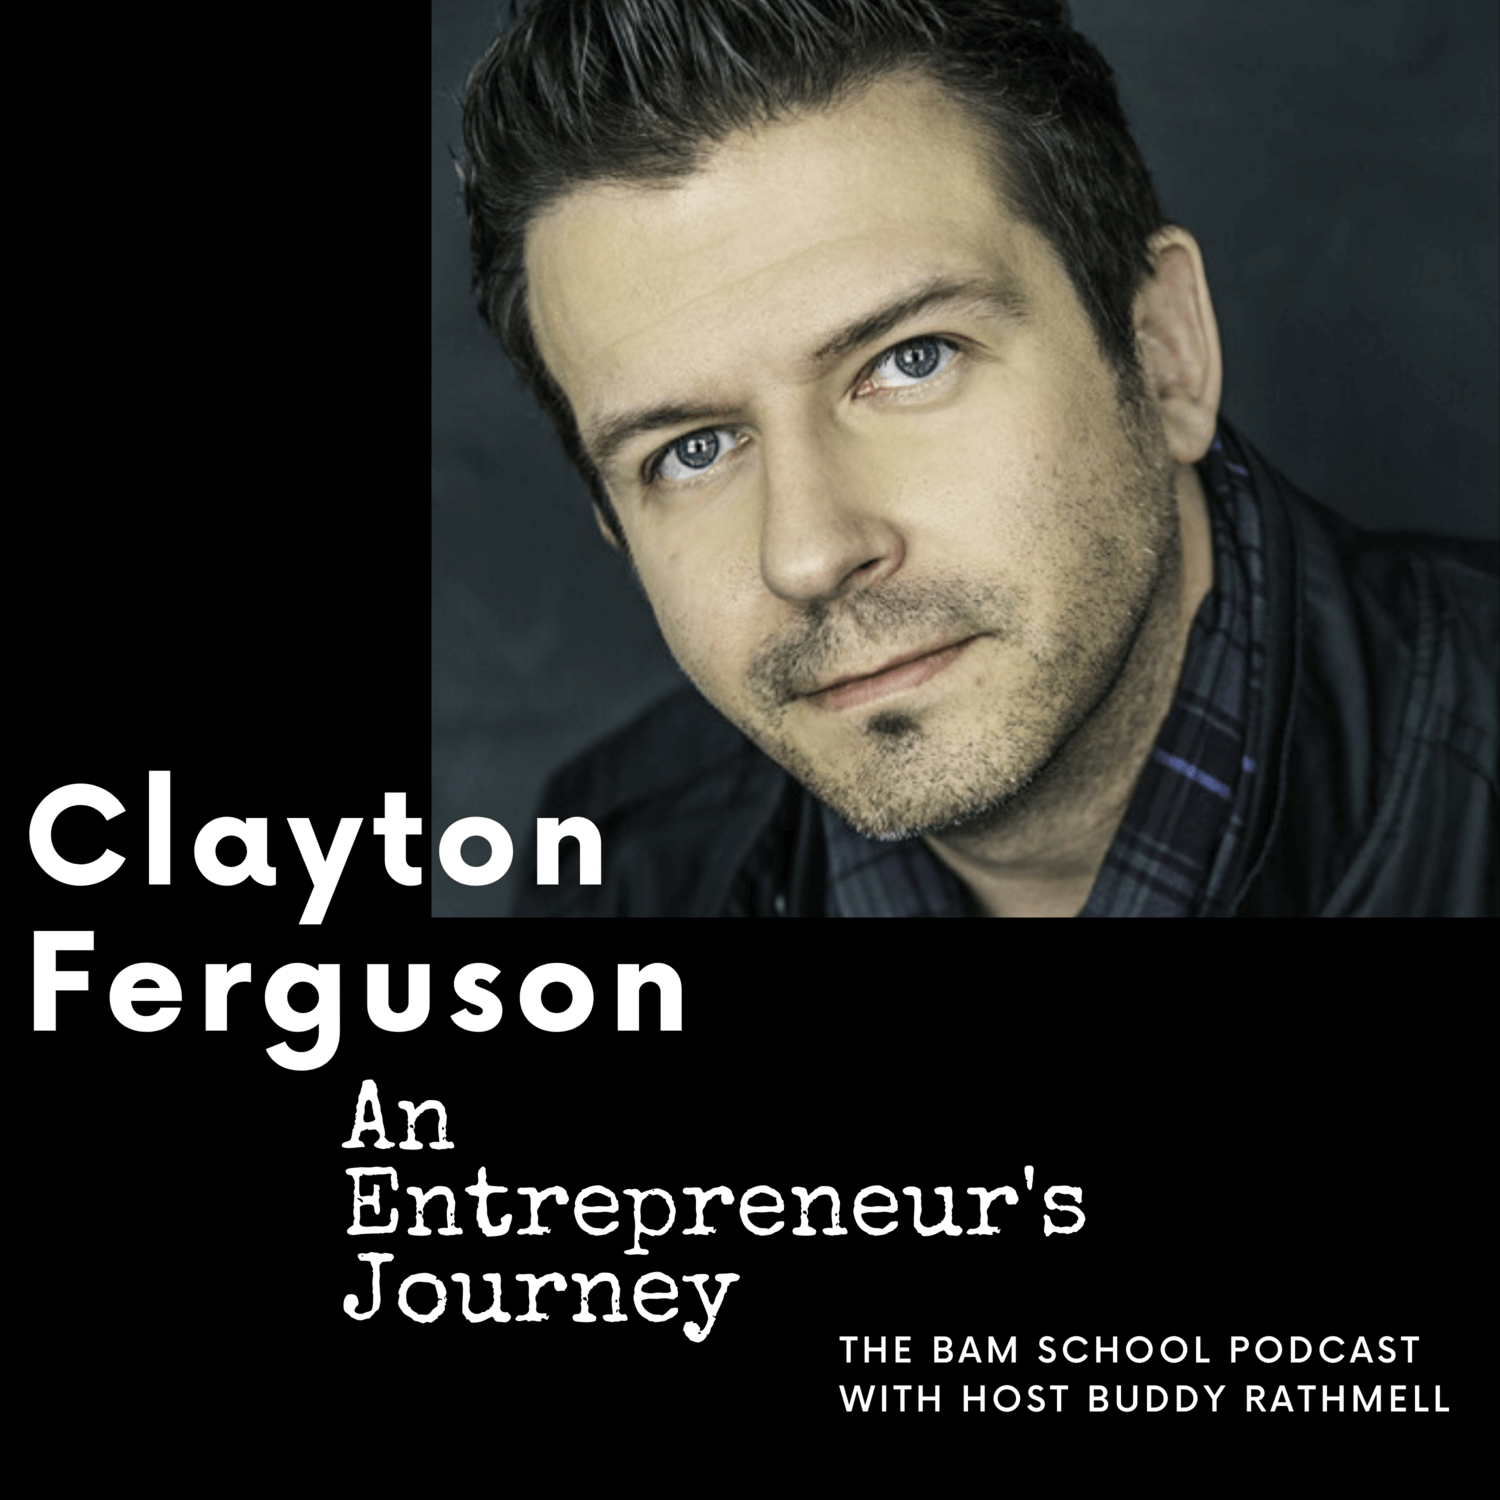 An Entrepreneur's Journey - Clayton Ferguson